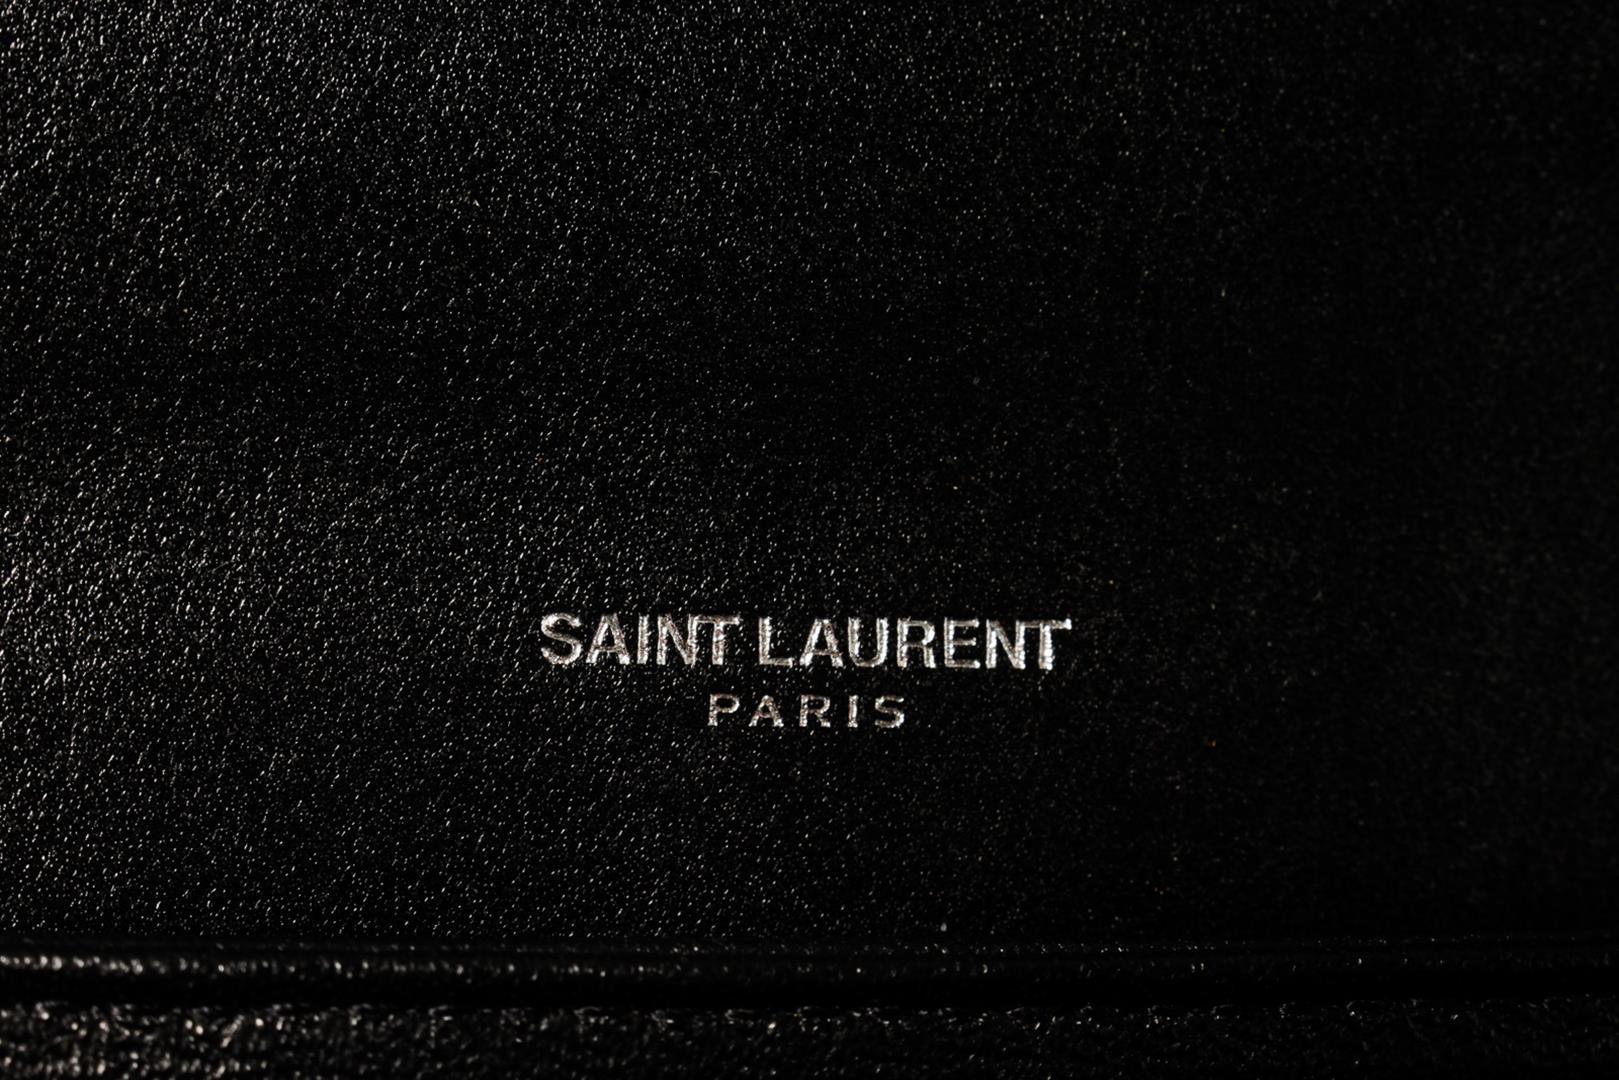 Saint Laurent Black Leather Babylone SHW Top Handle Bag